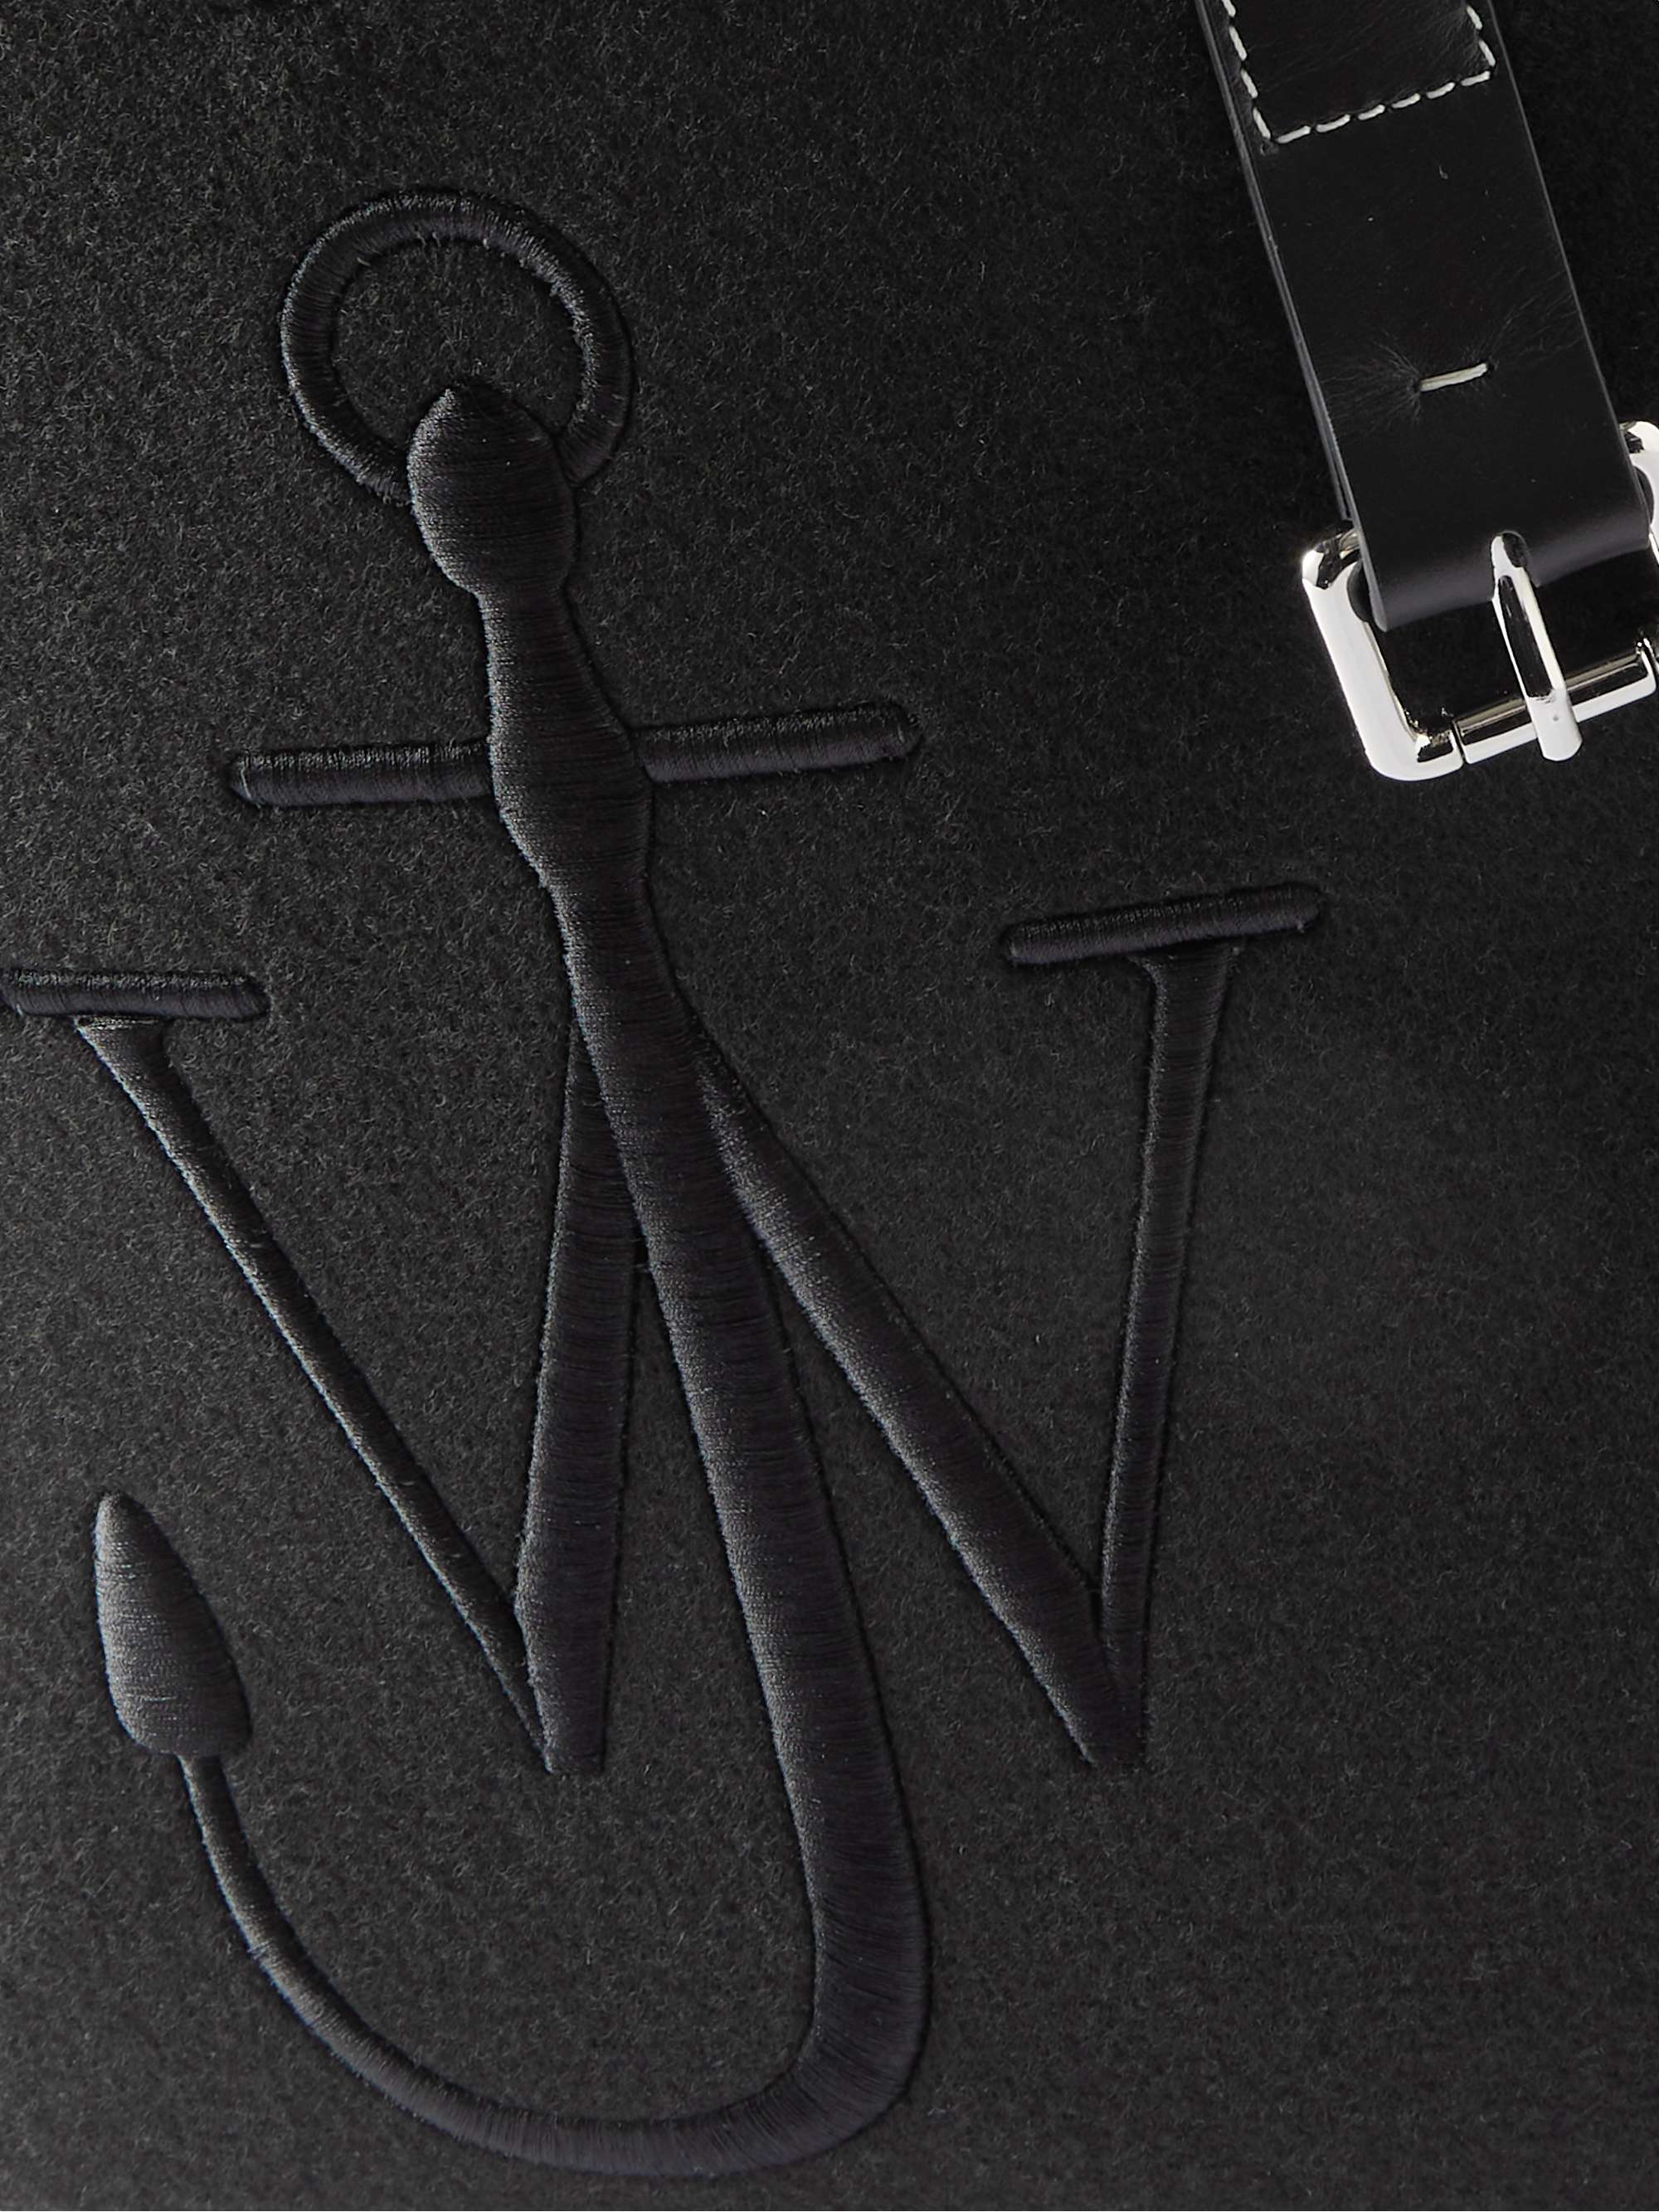 JW ANDERSON Leather-Trimmed Logo-Embroidered Felt Tote Bag